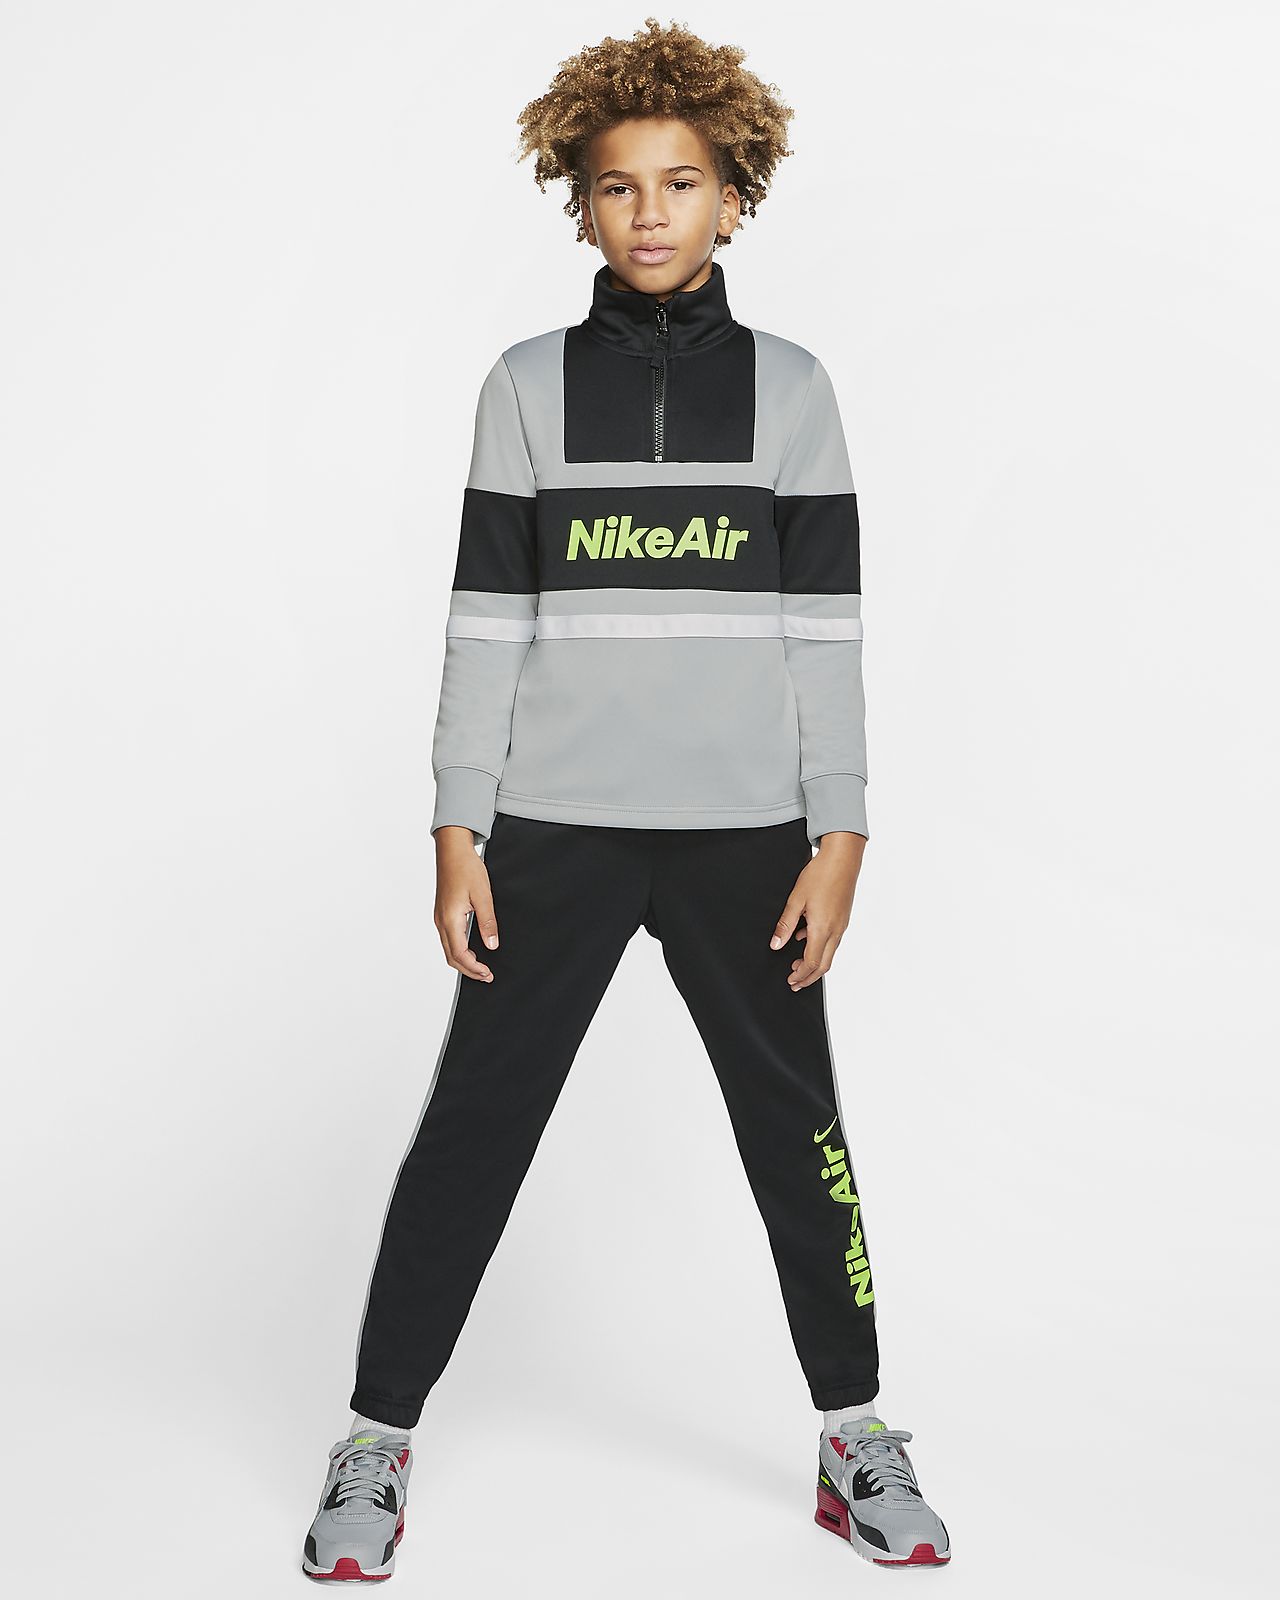 Nike Air Trainingsanzug für ältere Kinder (Jungen)